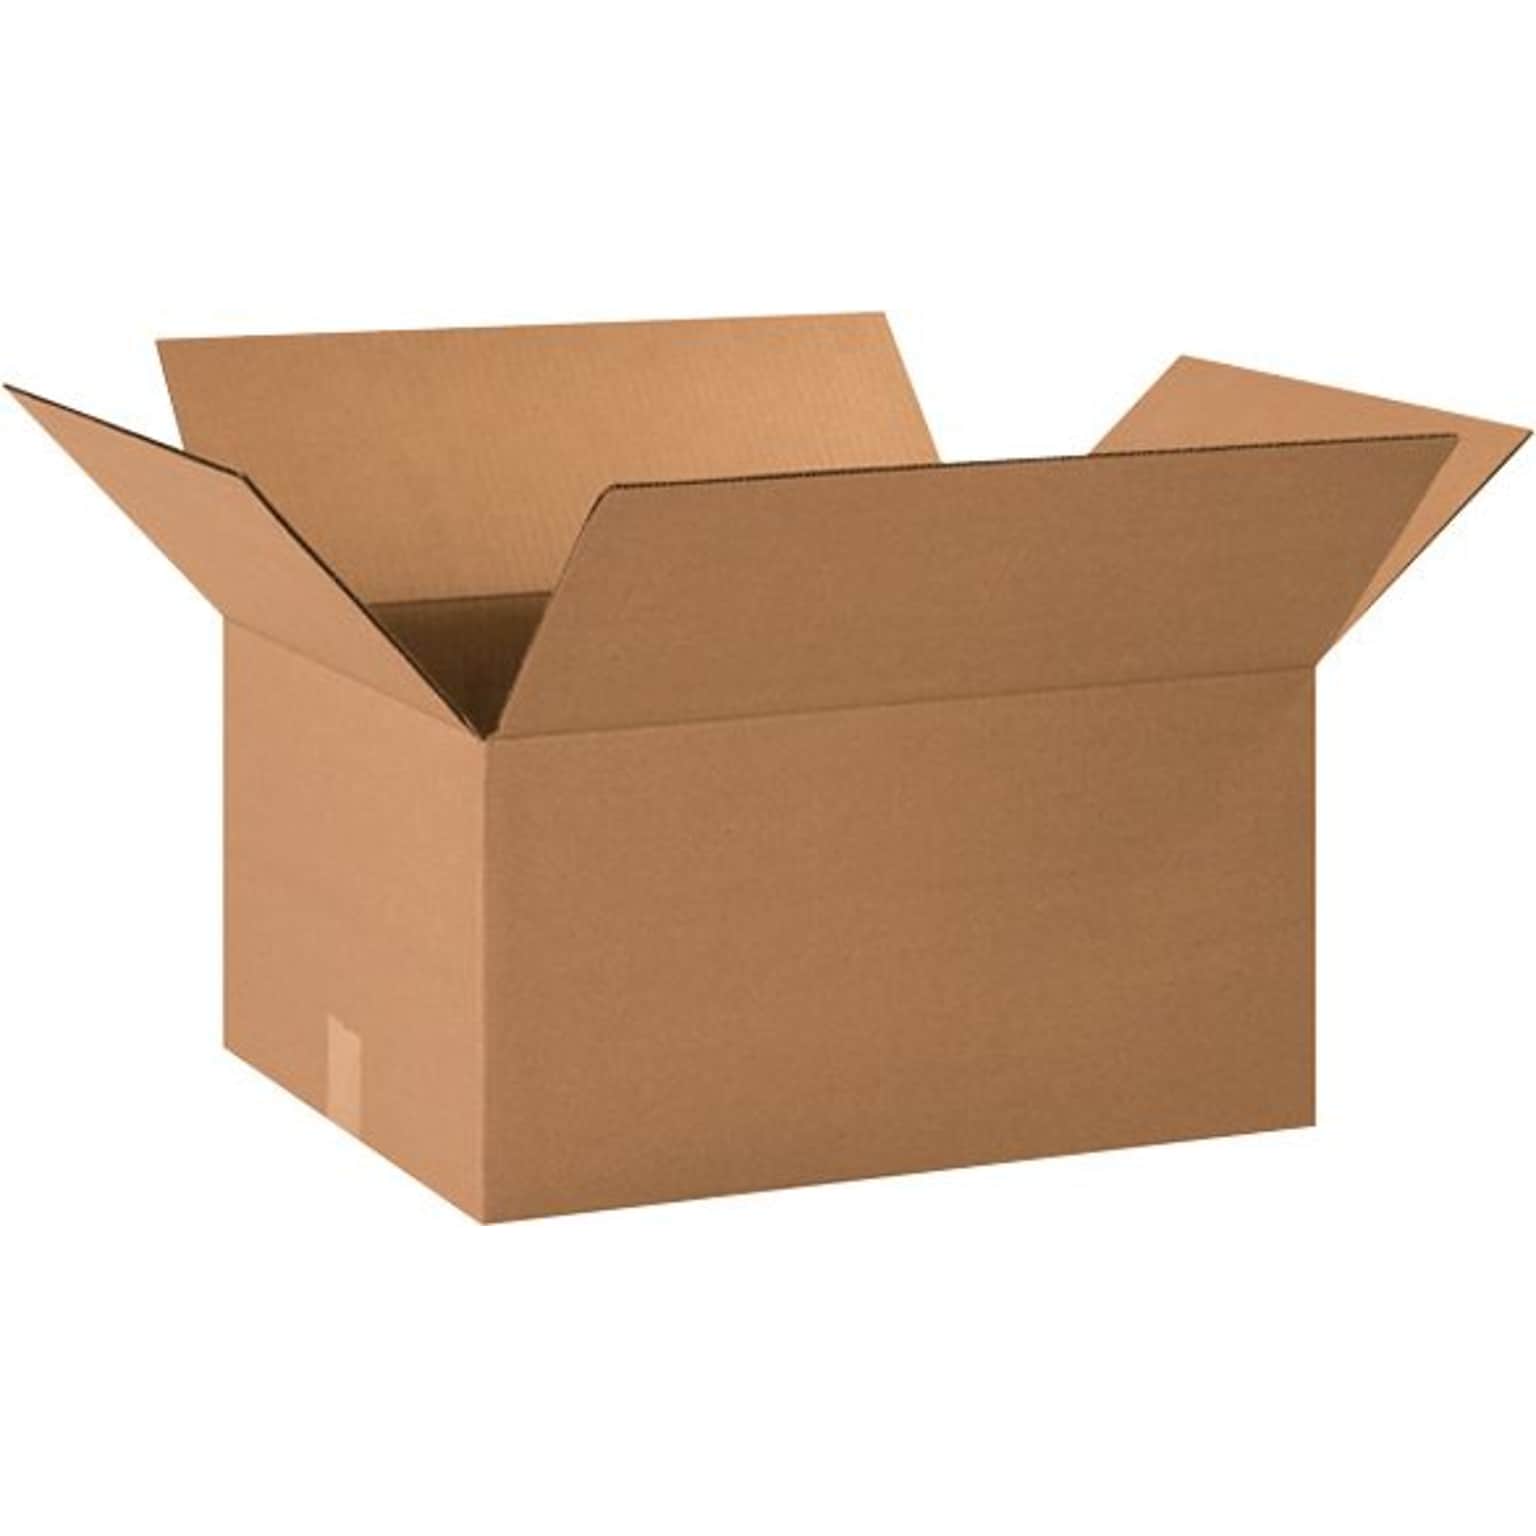 20 x 15 x 10 Shipping Boxes, 32 ECT, Brown, 20/Bundle (201510)